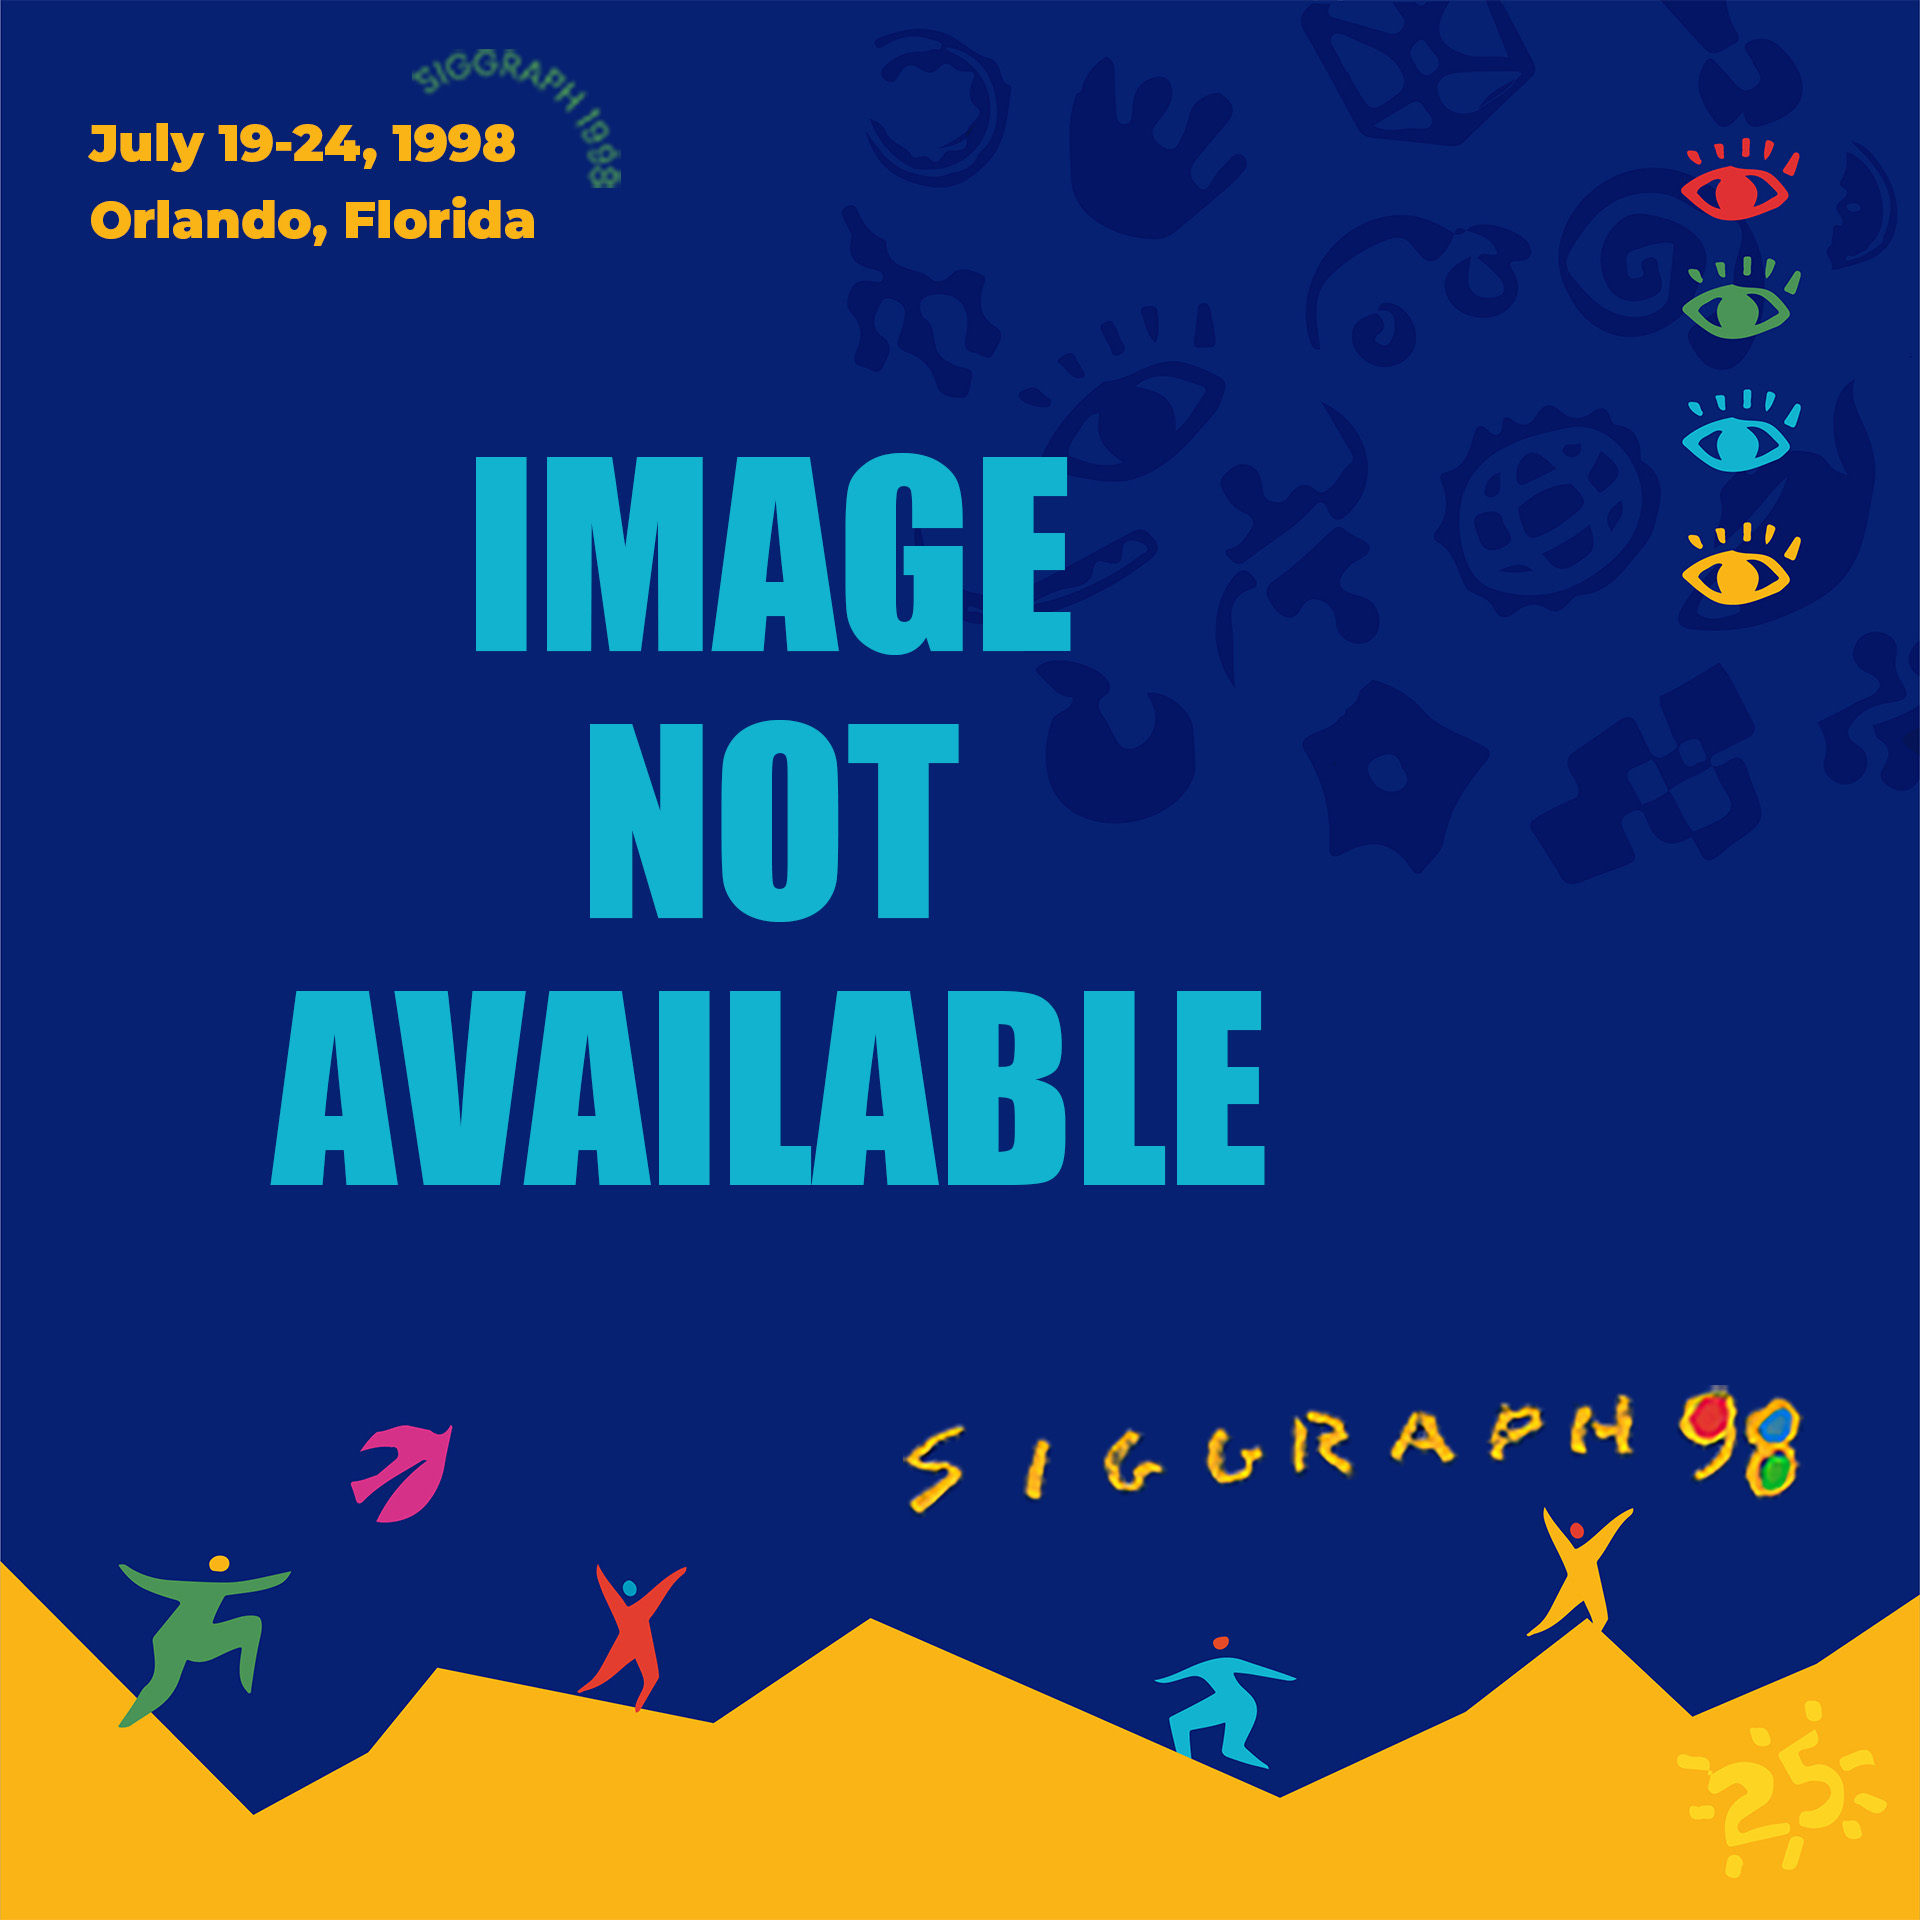 ©126, SIGGRAPH 98 Art and Character Animation Program